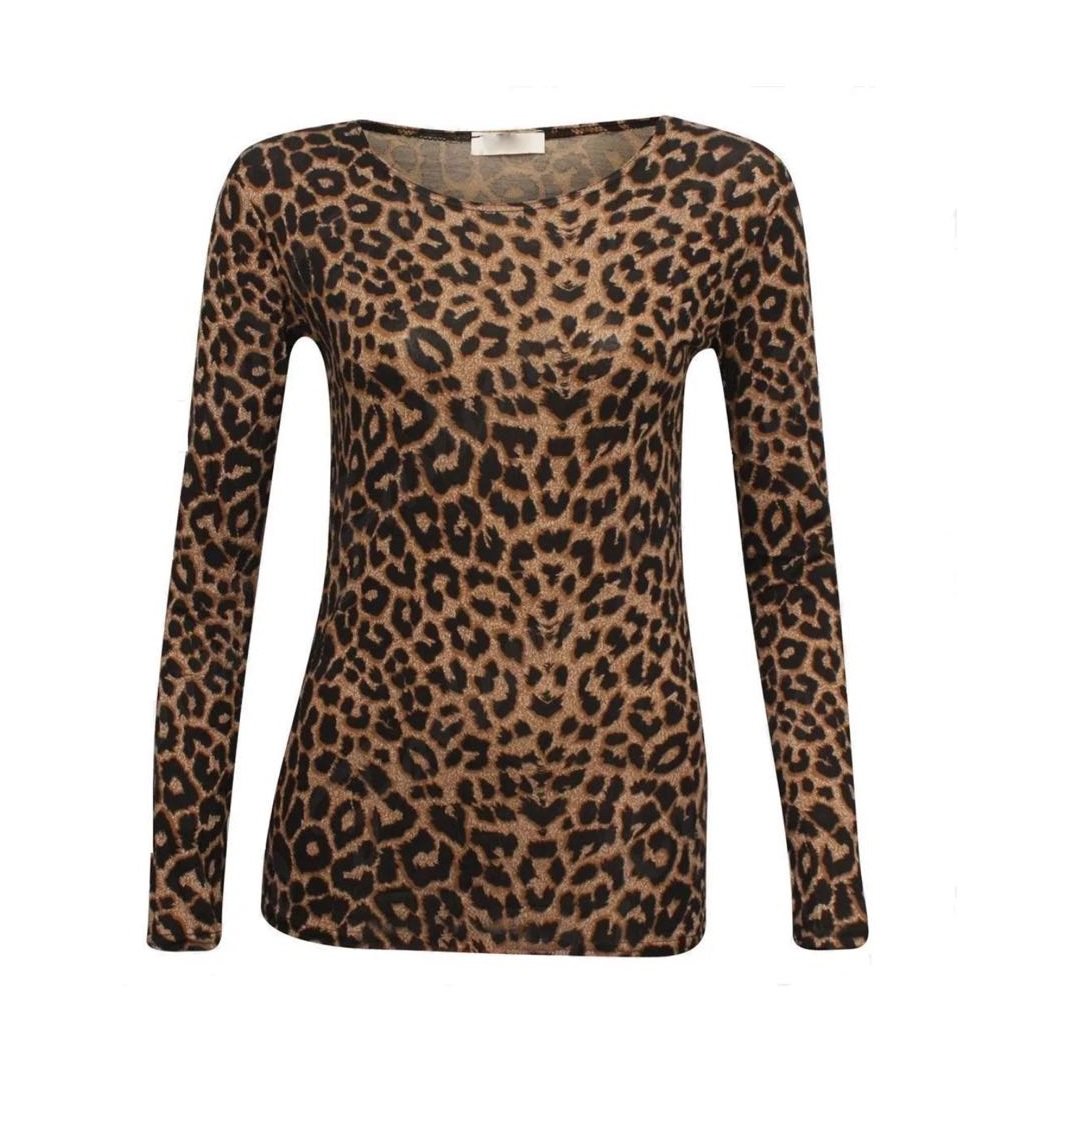 Women S Brown Leopard Print Long Sleeve Top Size Xl